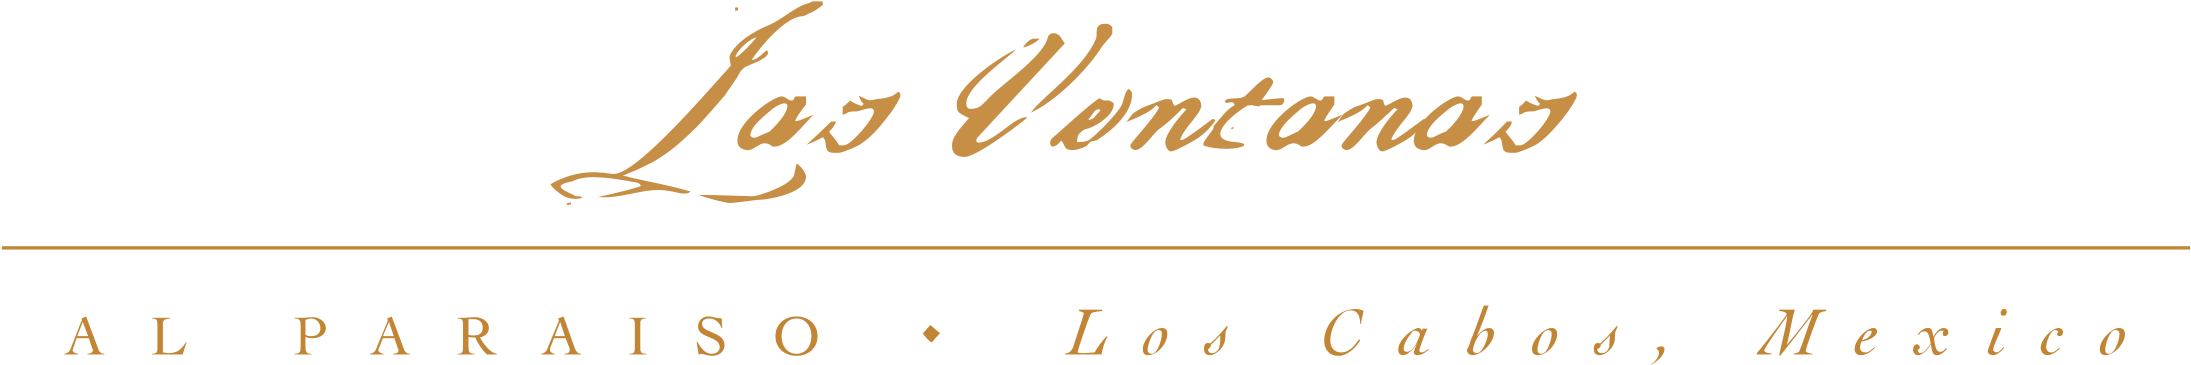 Las Ventanas Logo Png Transparent - Calligraphy (2400x2400), Png Download